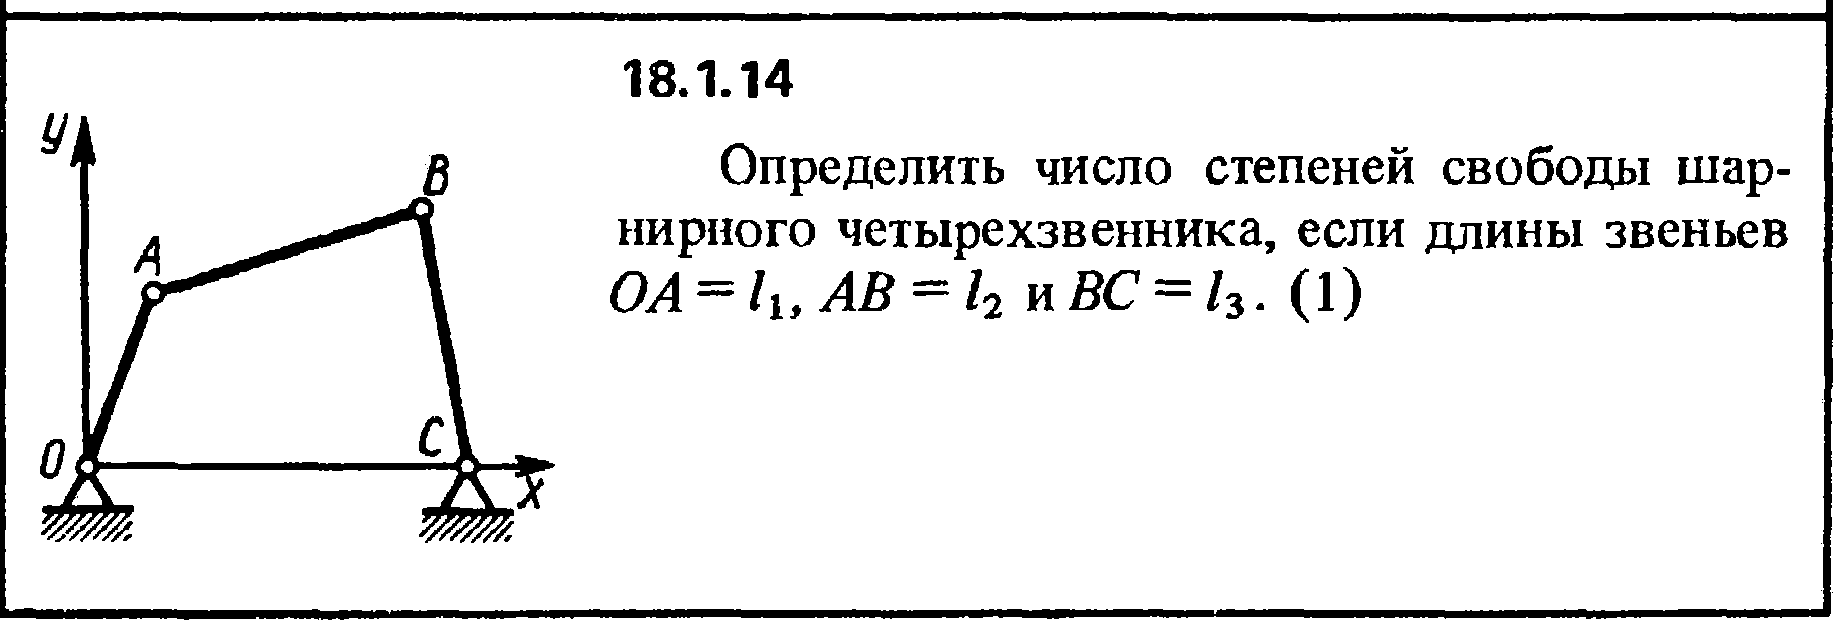 Решение 18.1.14 из сборника (решебника) Кепе О.Е. 1989